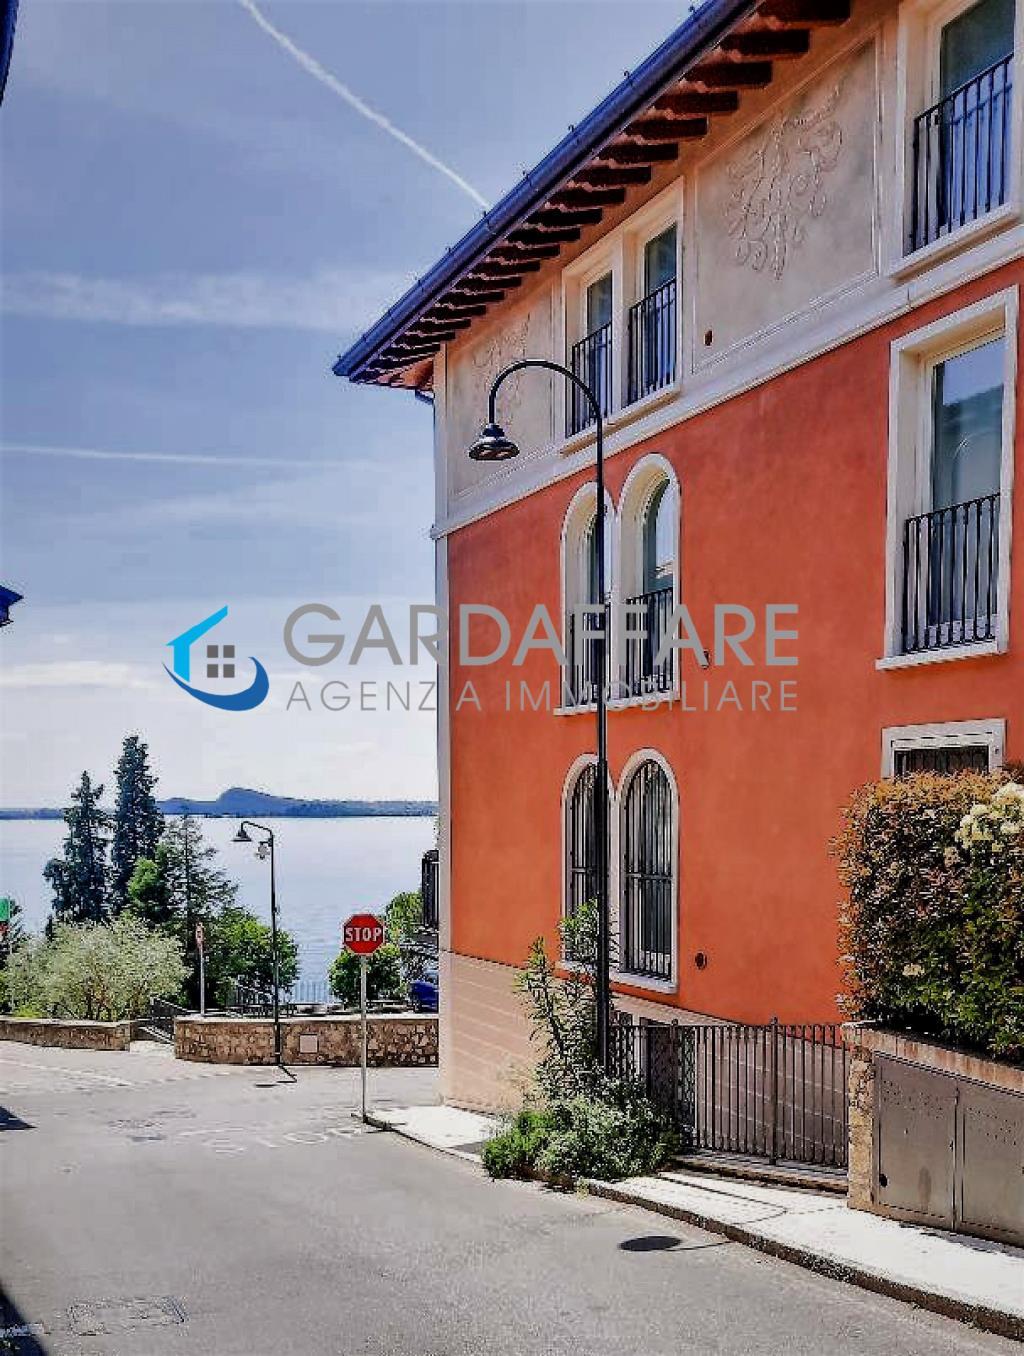 Flat Luxury Properties for Buy in Gardone Riviera - Cod. 16-35b